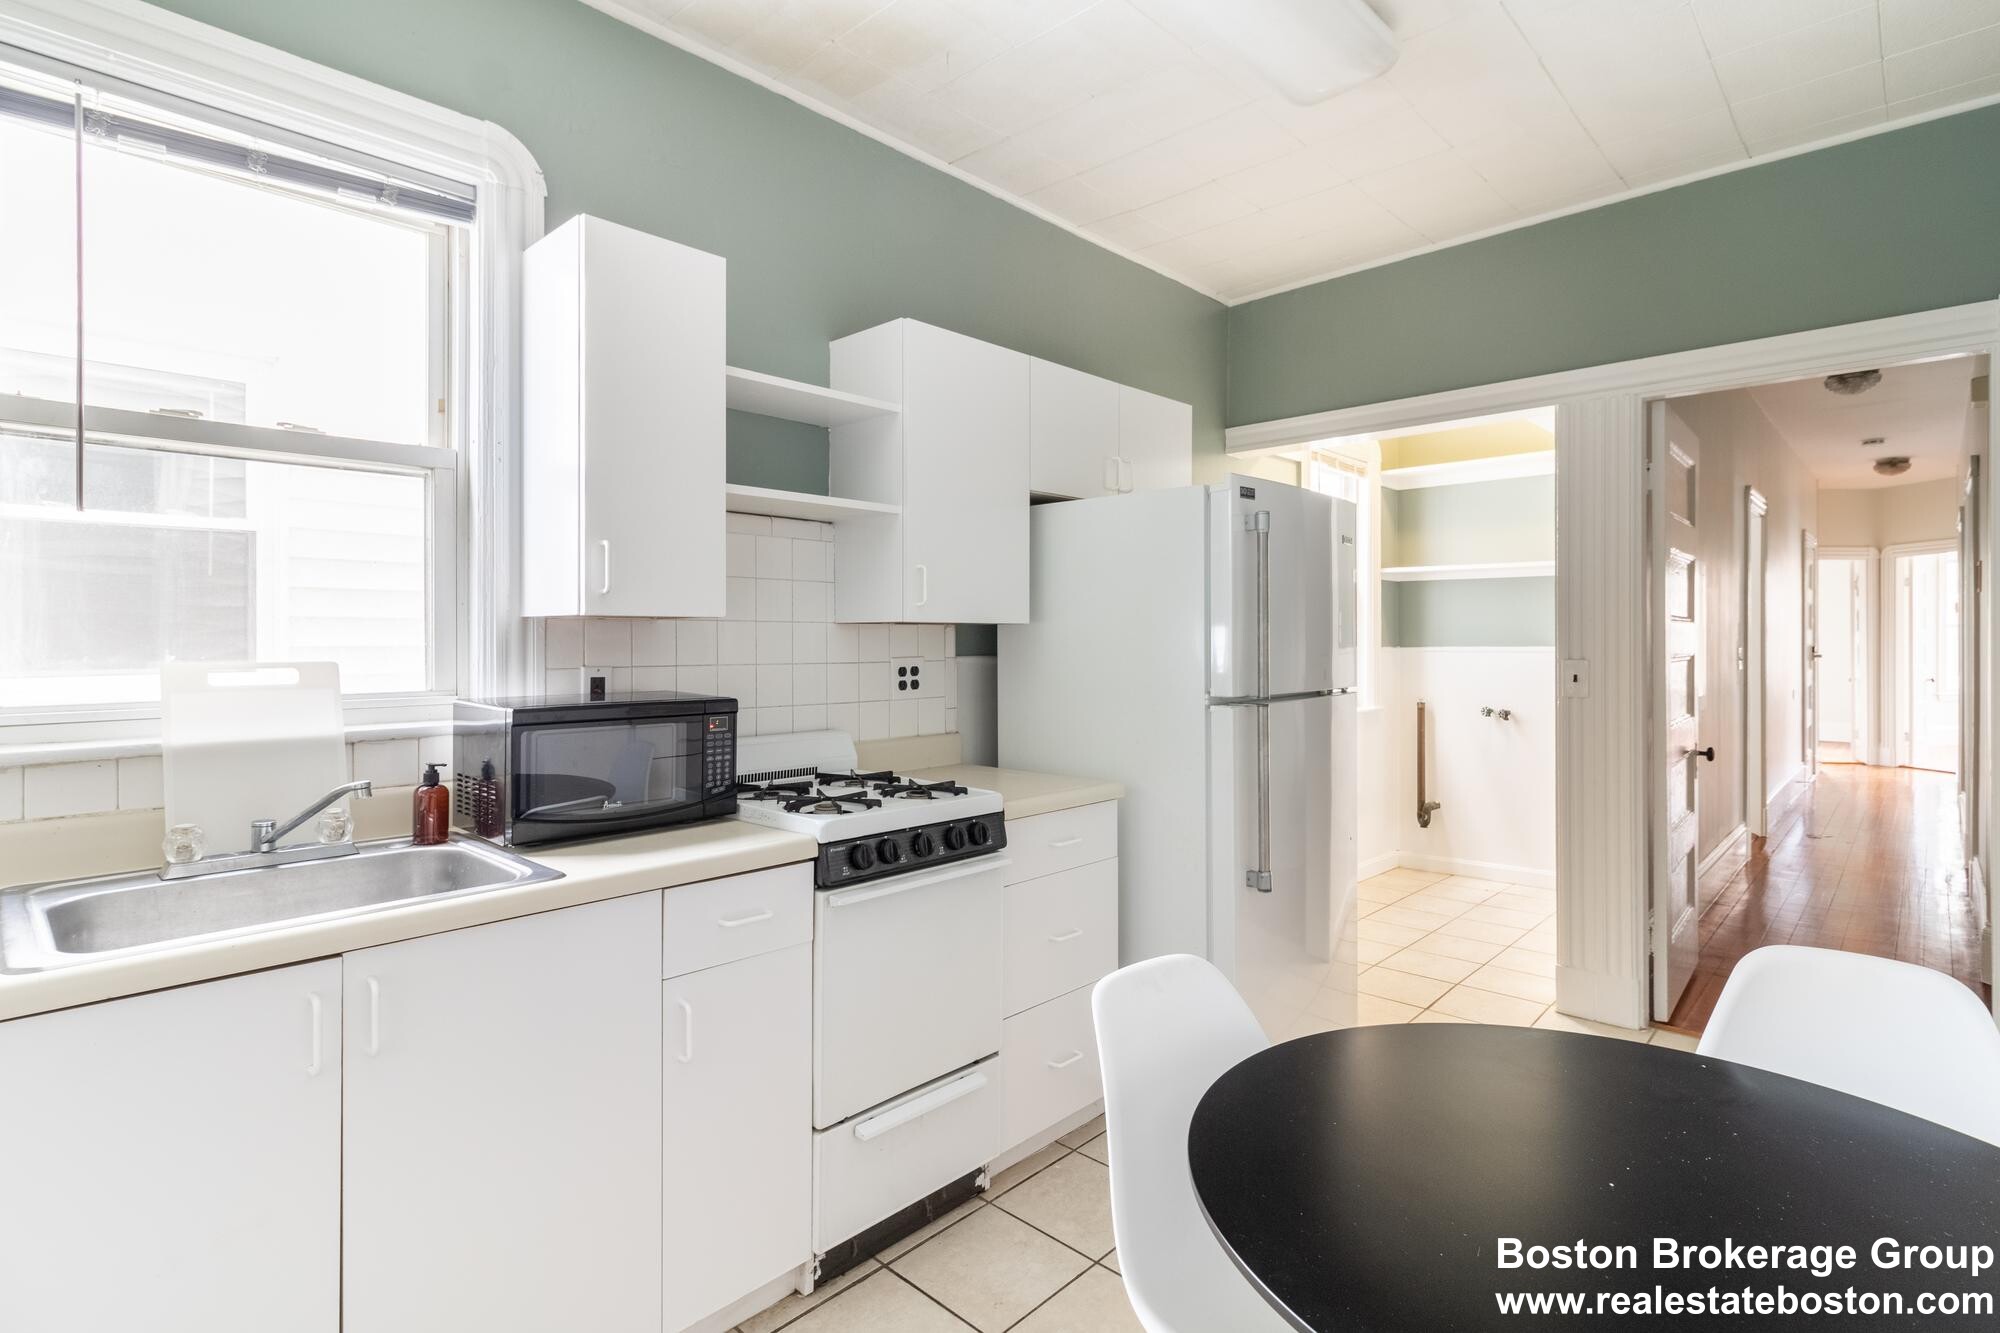 Photos of apartment on Eastman St.,Boston MA 02125